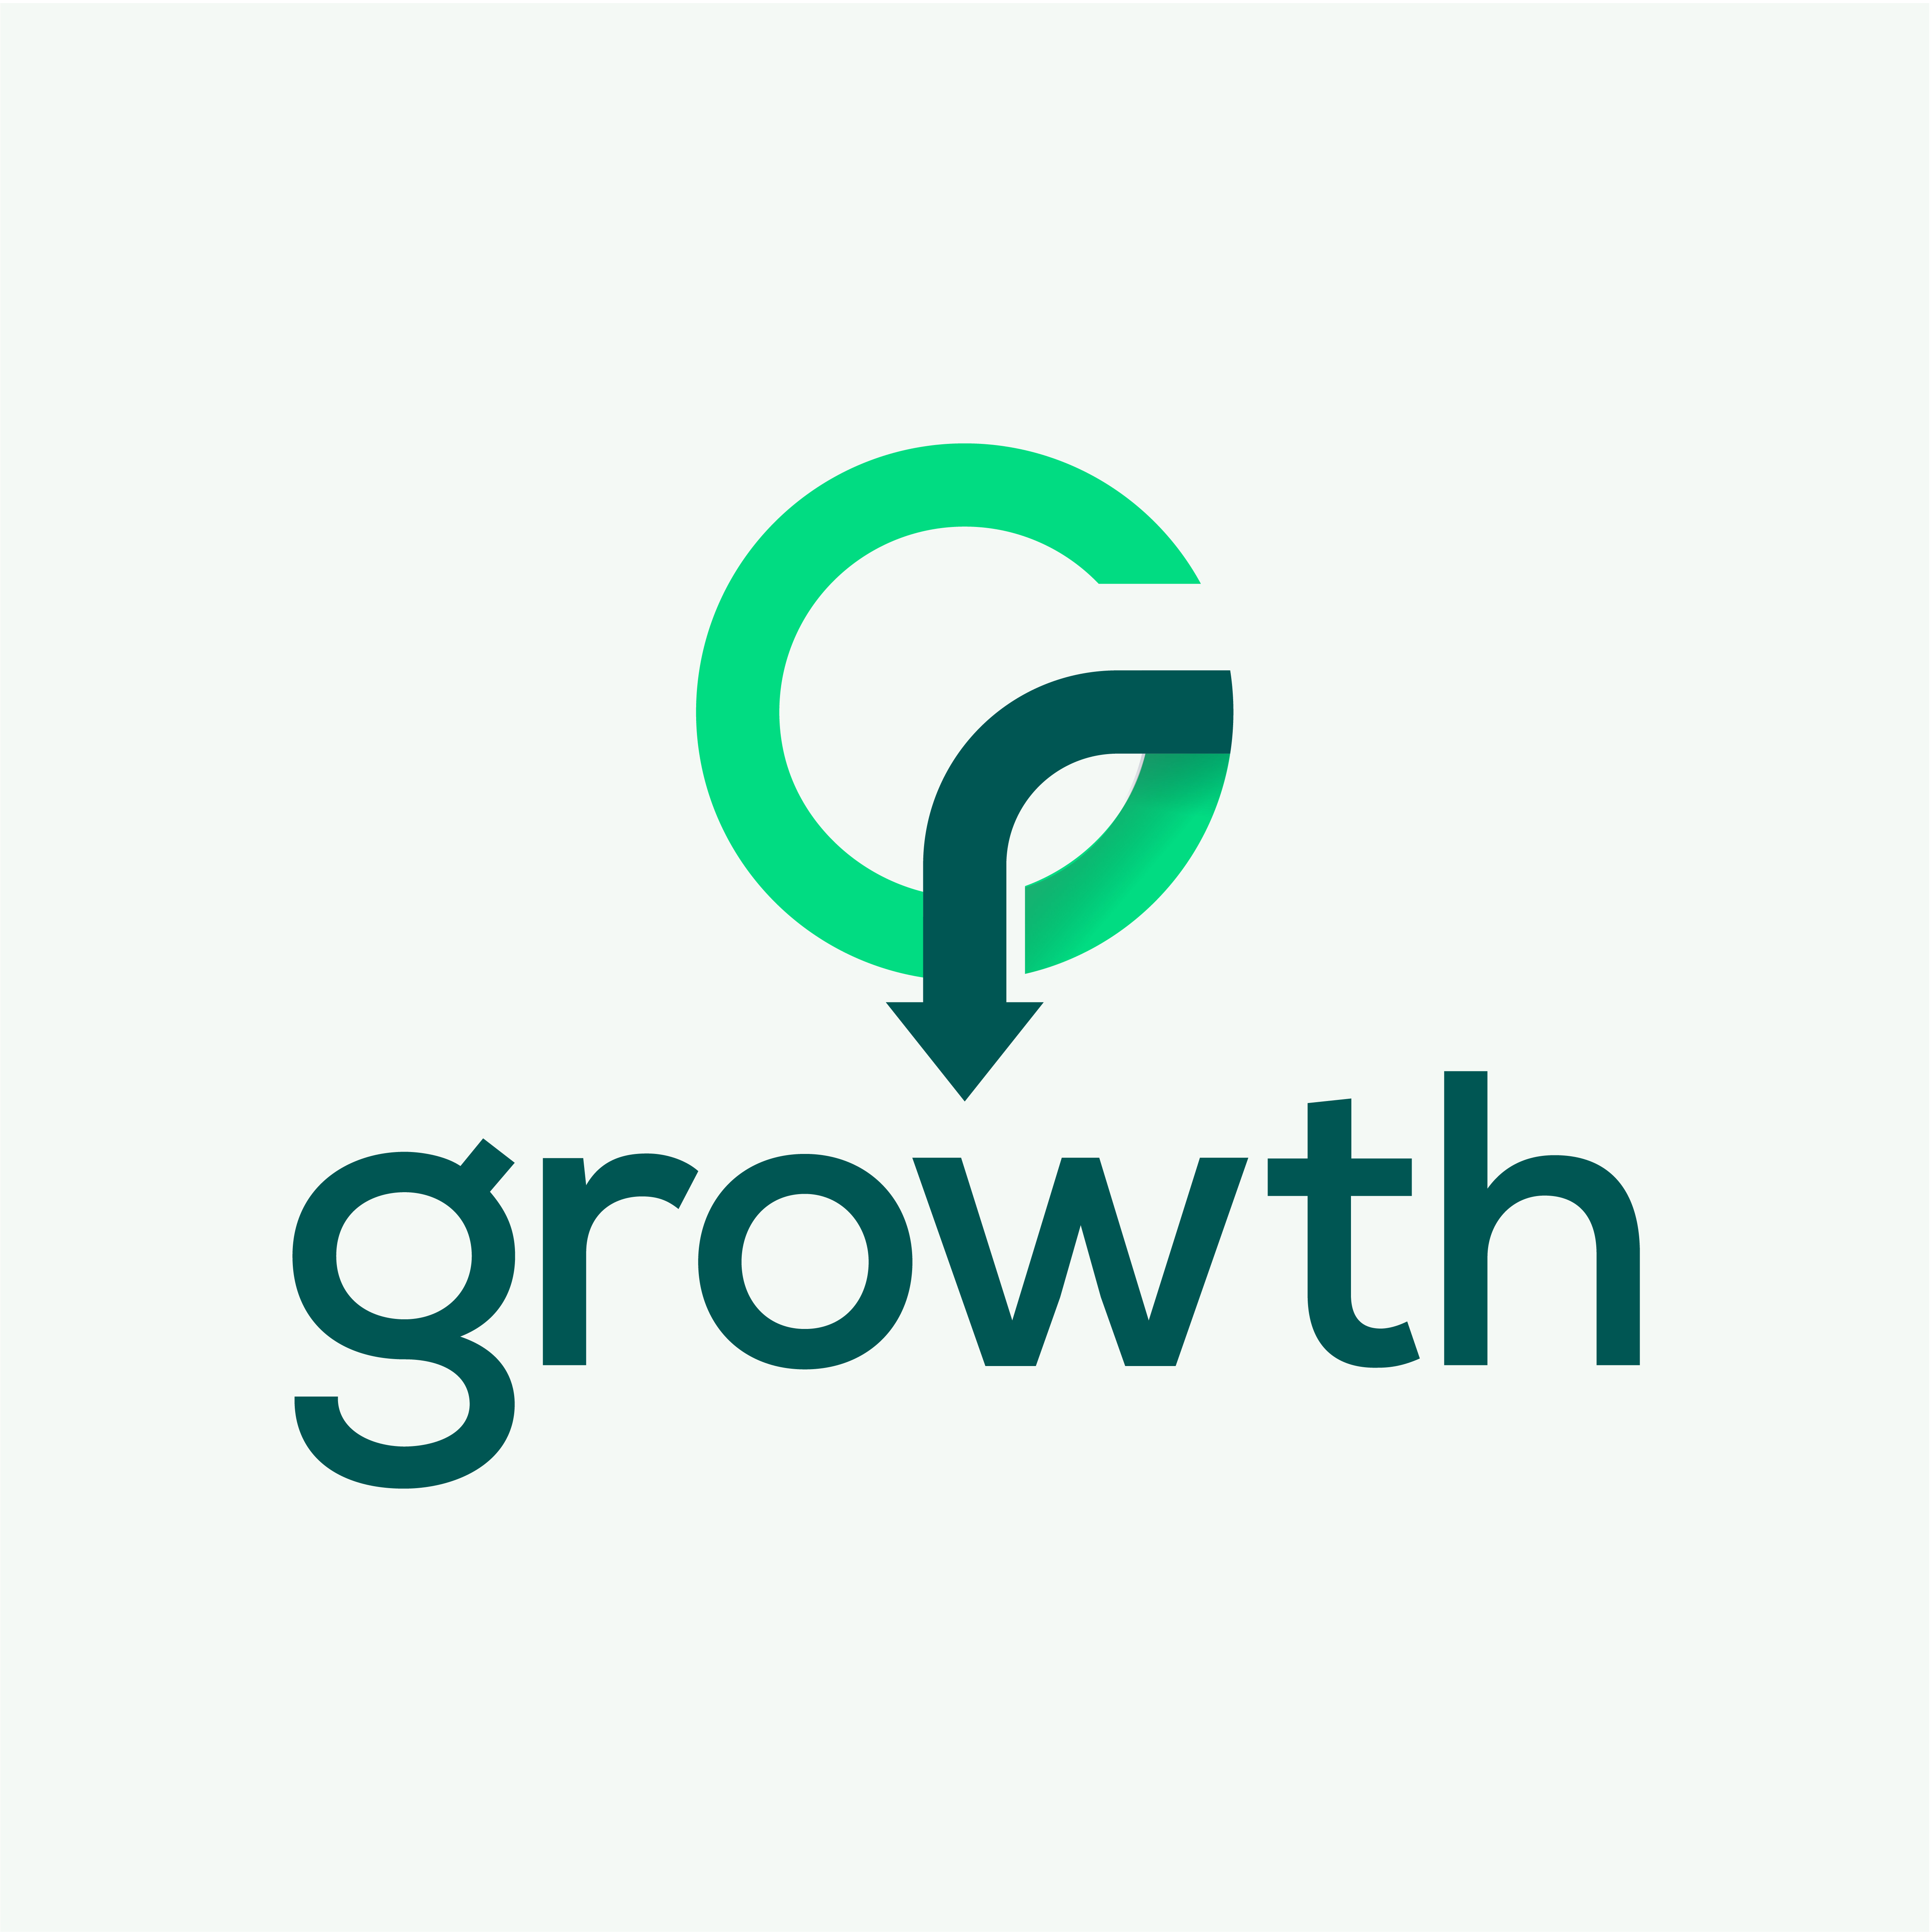 Growth Logos: the Best Growth Logo Images | 99designs | Graphic design logo,  Branding design logo, Call logo